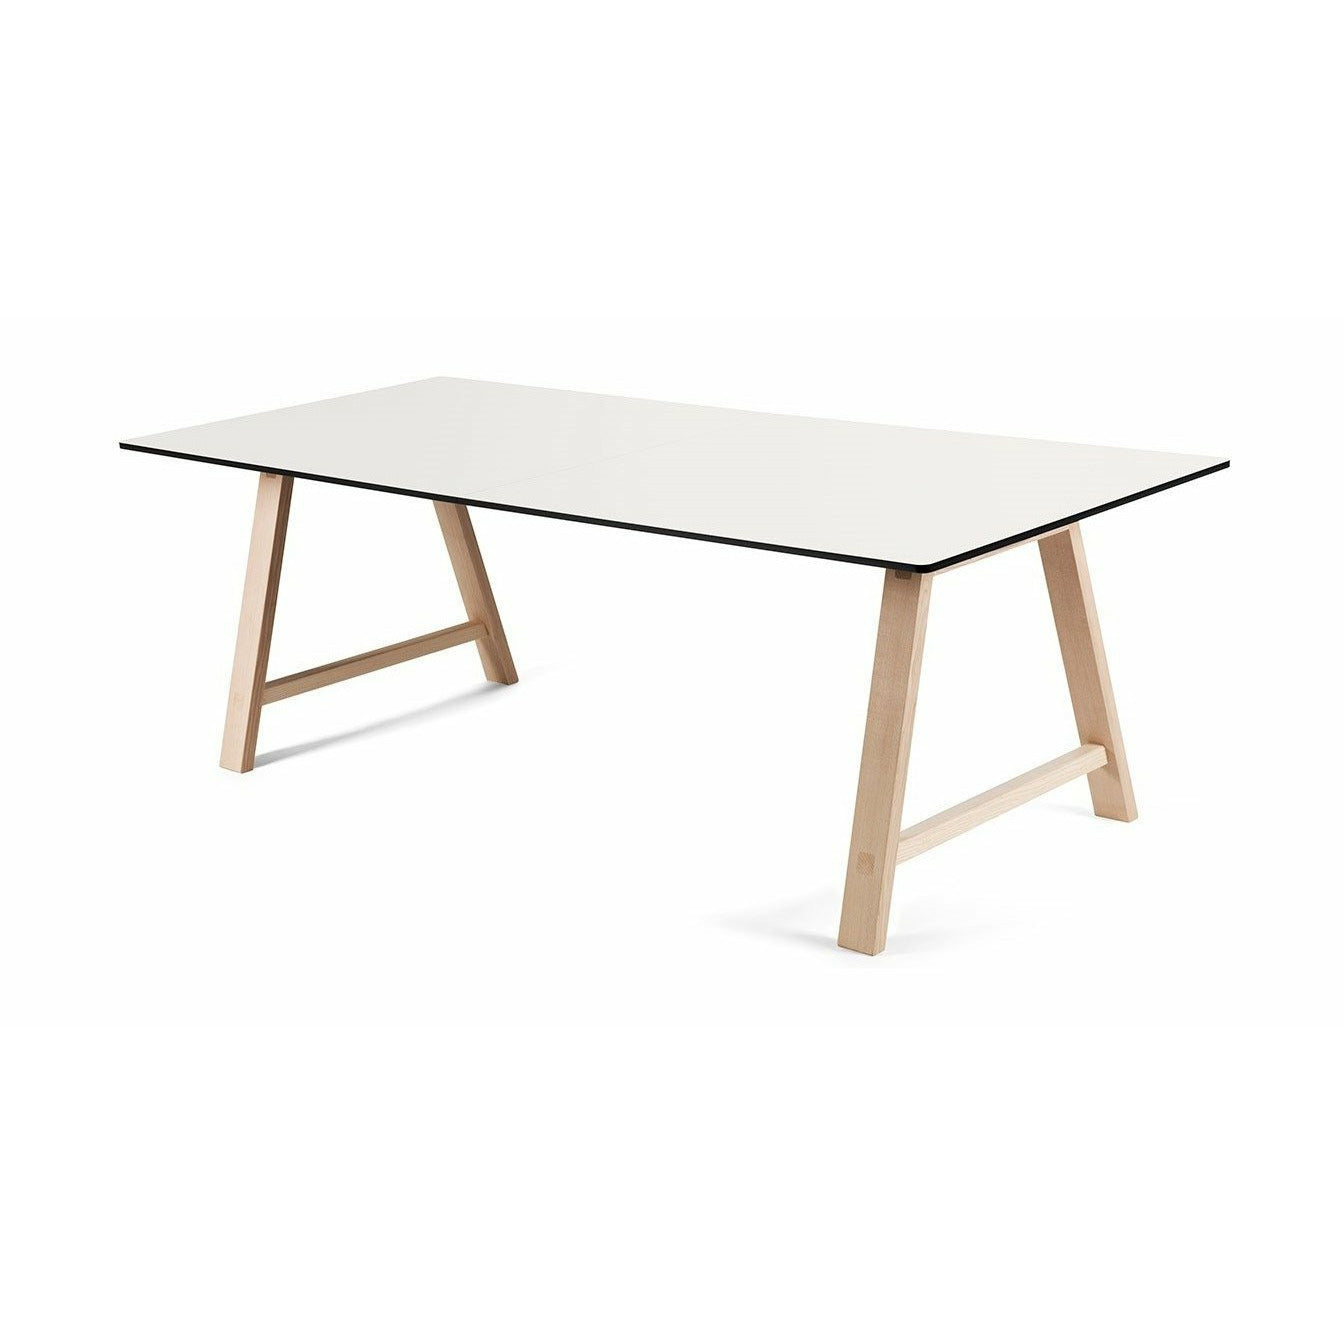 Andersen Furniture T1 PULL -OUT TABLE, VIT LAMINATE, SOAP OAK FÖRSTOD, 180 cm